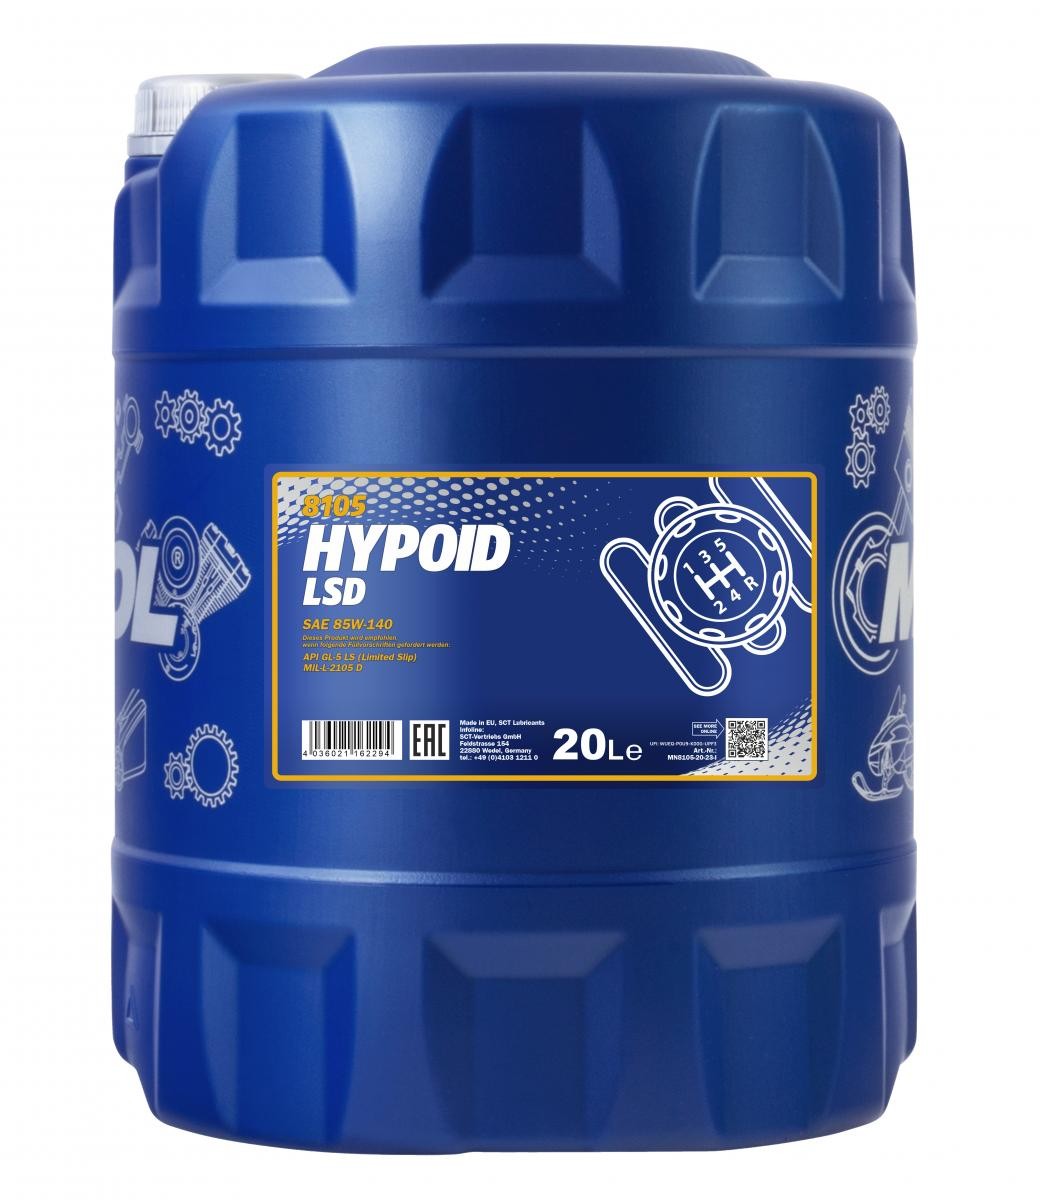 MANNOL Hypoid LSD 85W-140, Mineralöl, Inhalt: 20l MIL-L 2105 D Getriebeöl MN8105-20 kaufen